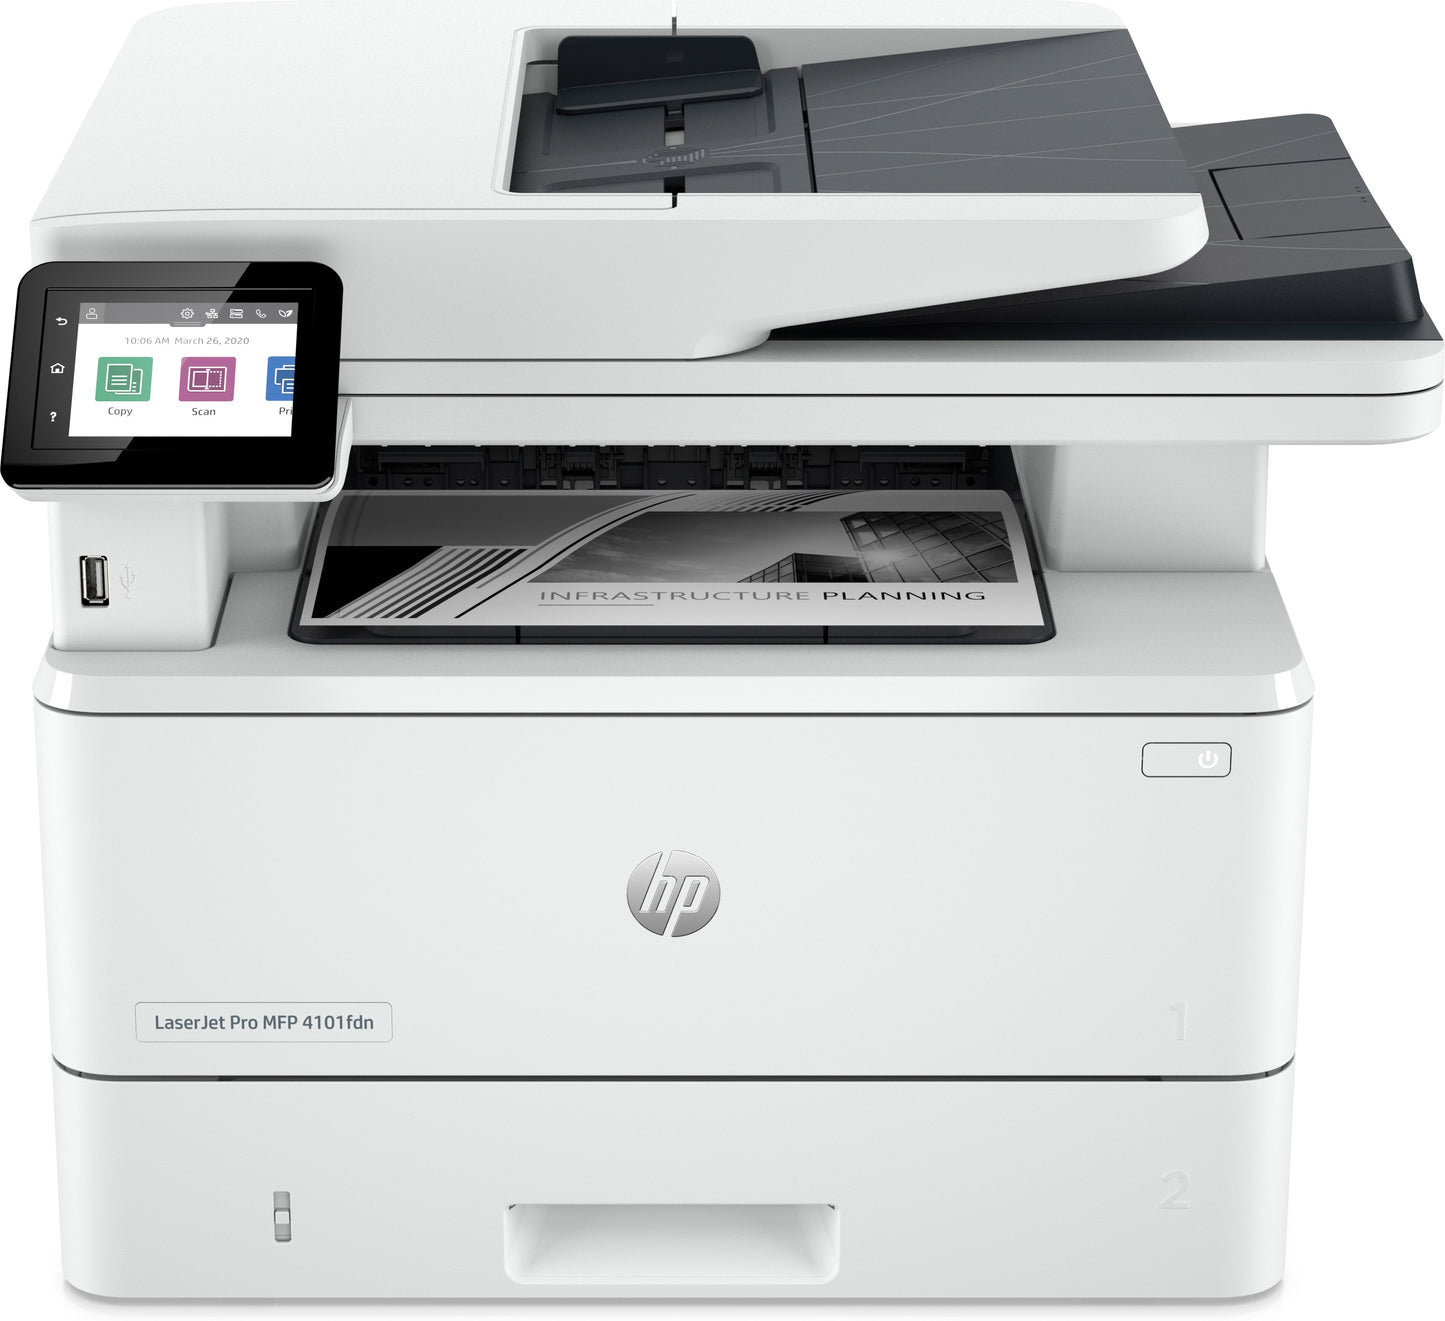 LaserJet Pro MFP 4102fdn Printer